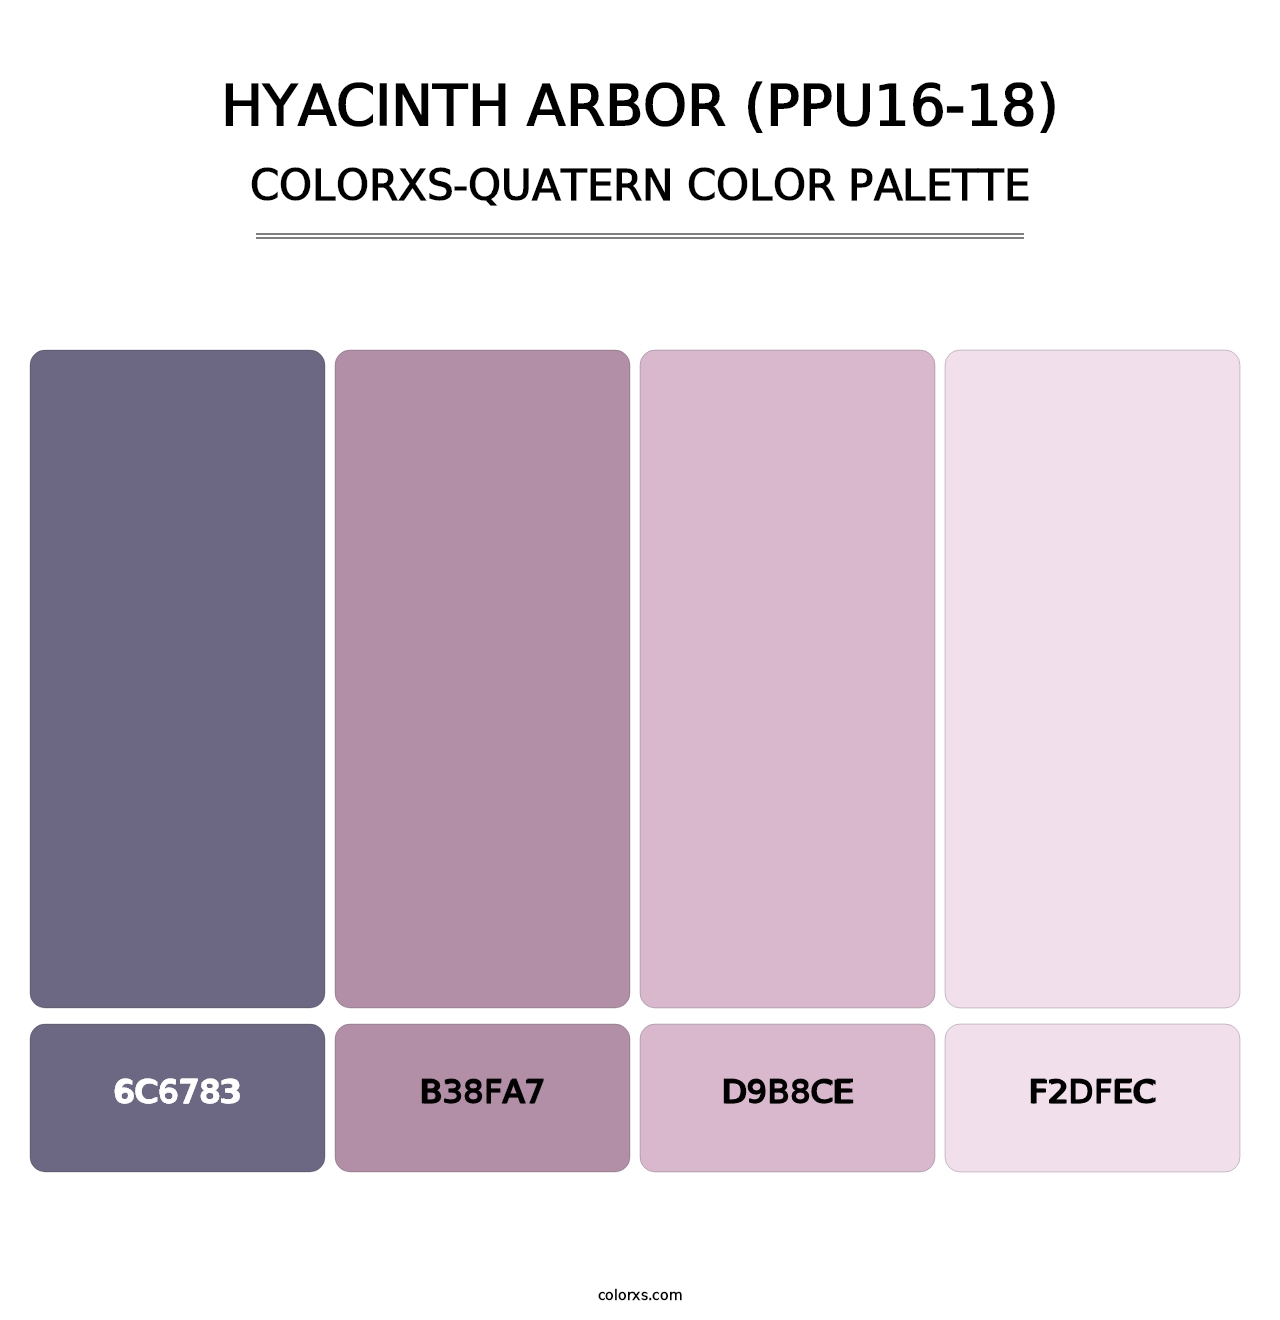 Hyacinth Arbor (PPU16-18) - Colorxs Quatern Palette